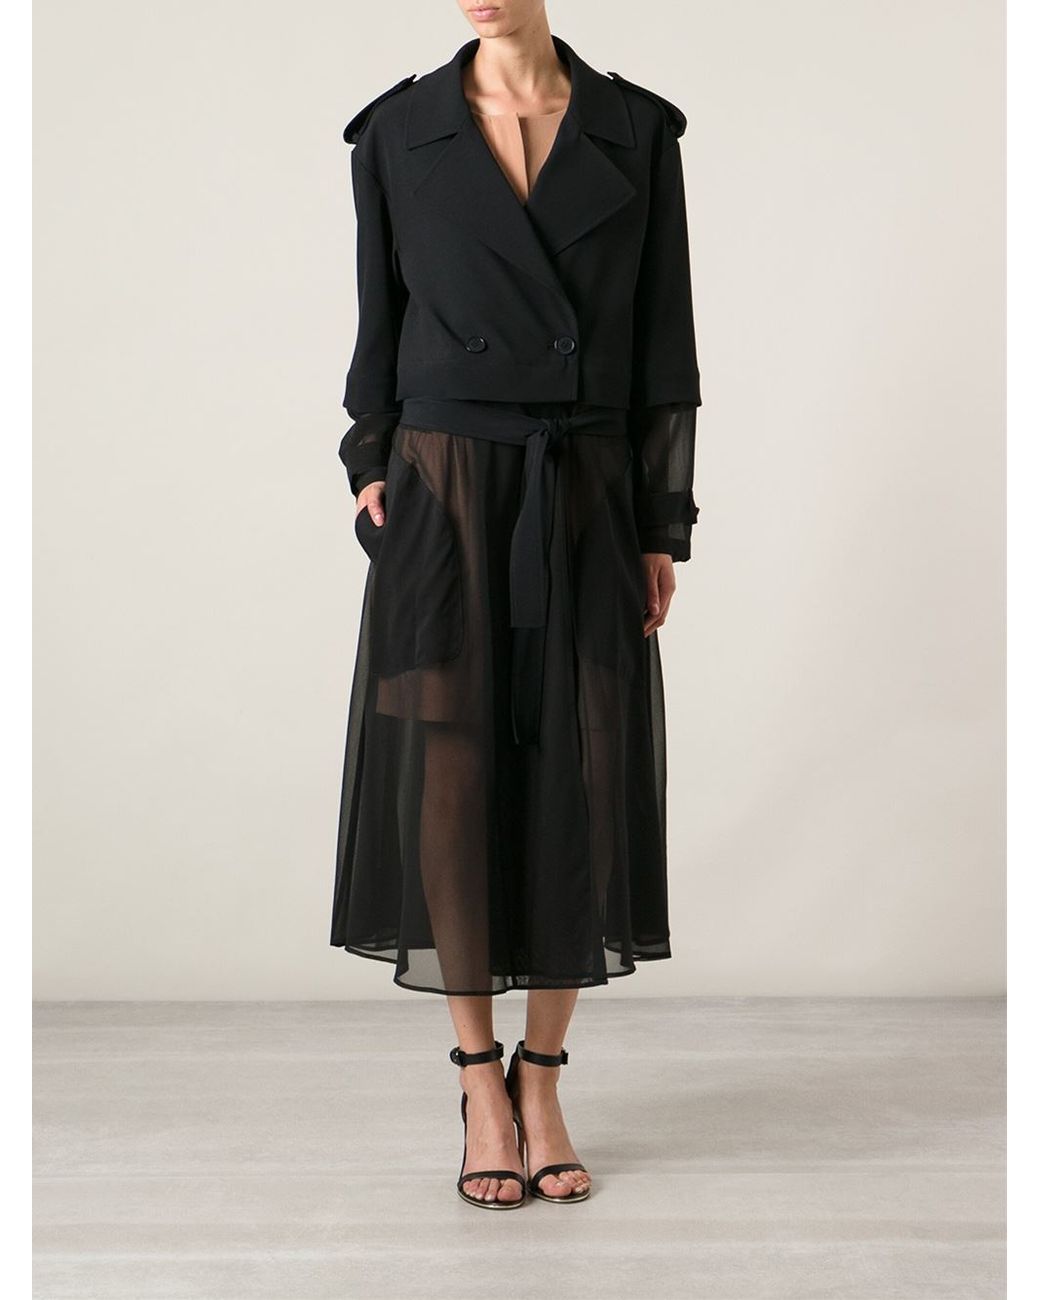 DKNY Sheer Long Trench Coat in Black | Lyst